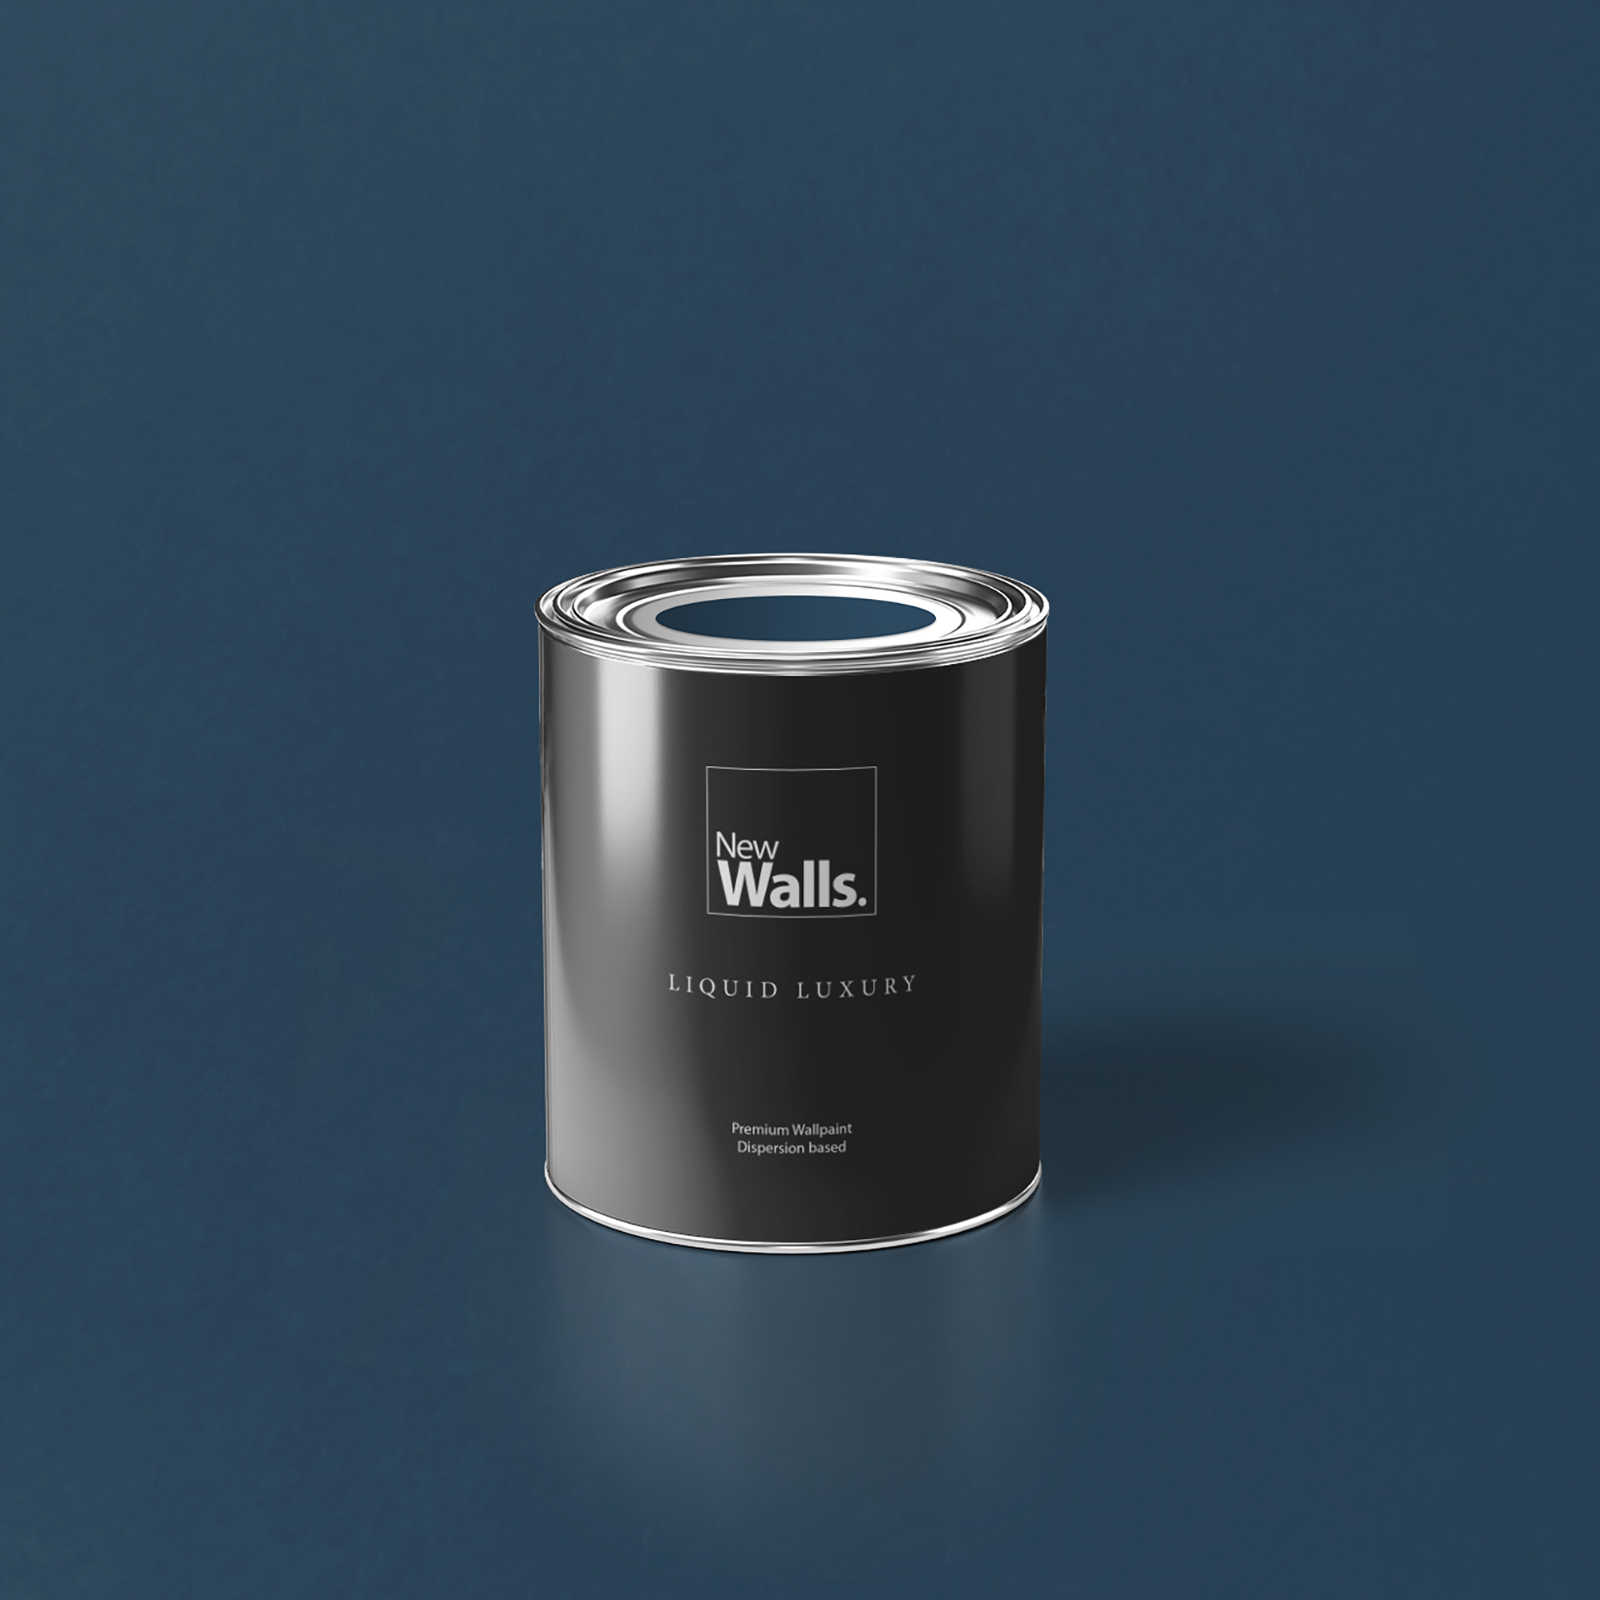         Premium Wall Paint noble dark blue »Blissful Blue« NW308 – 1 litre
    